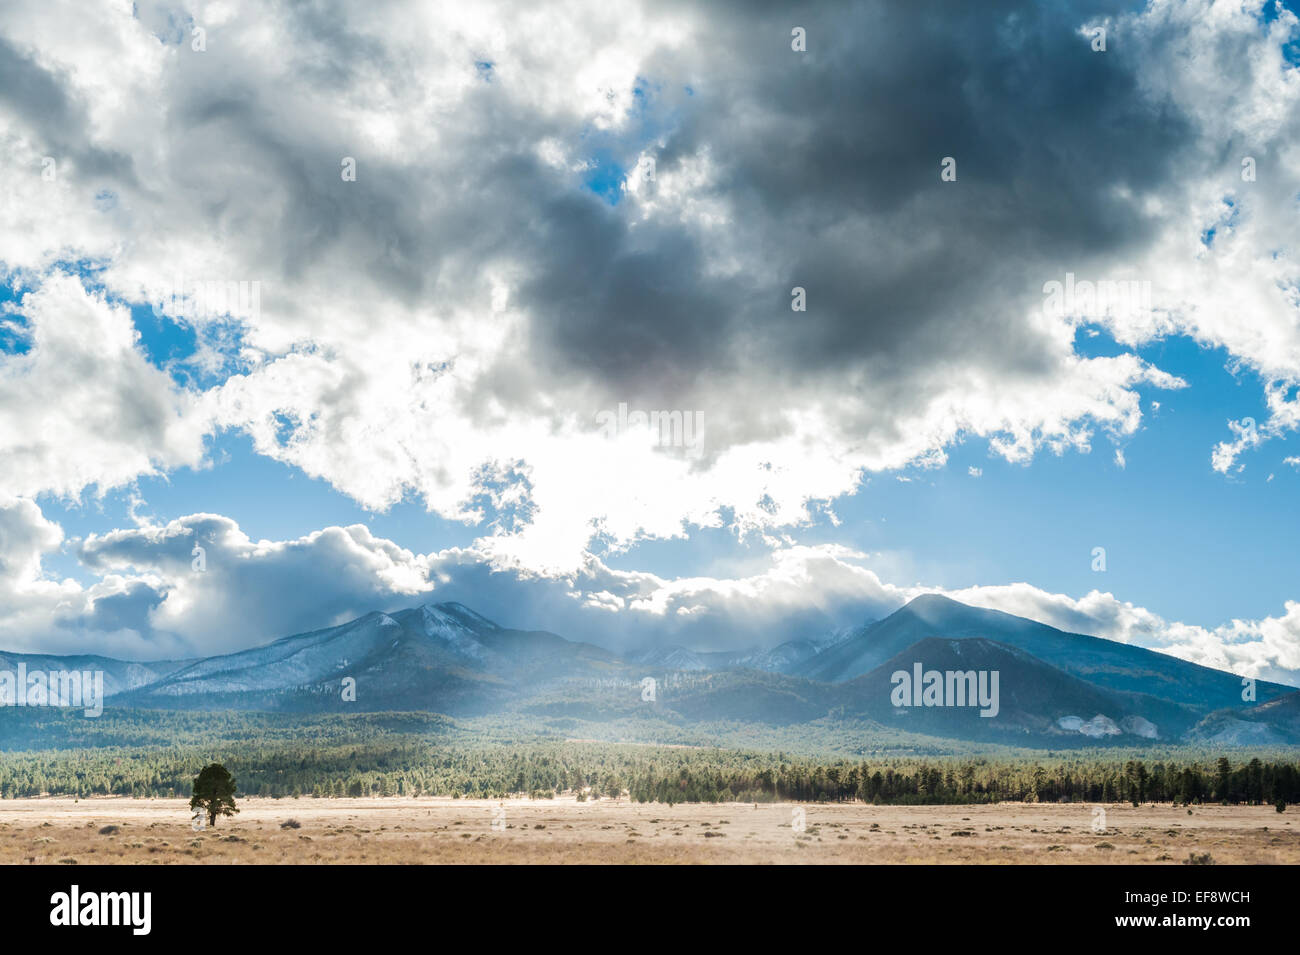 USA, Arizona, San Francisco Peaks, Flagstaff, Scenic view of landscape Stock Photo